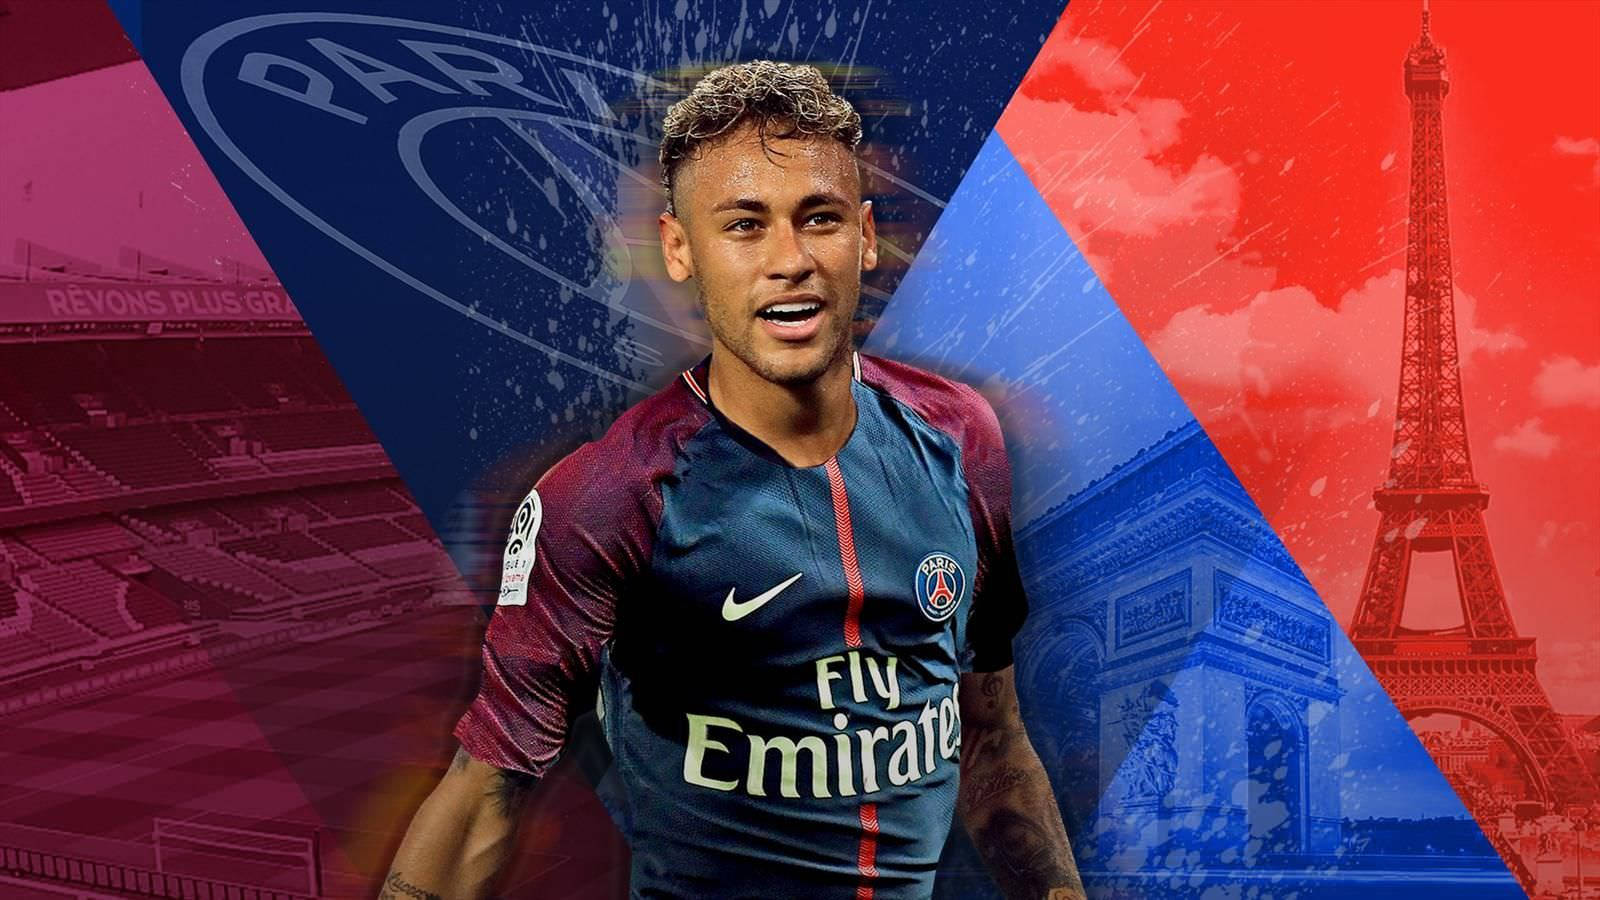 Neymar In A Vibrant Geometric Backdrop Background